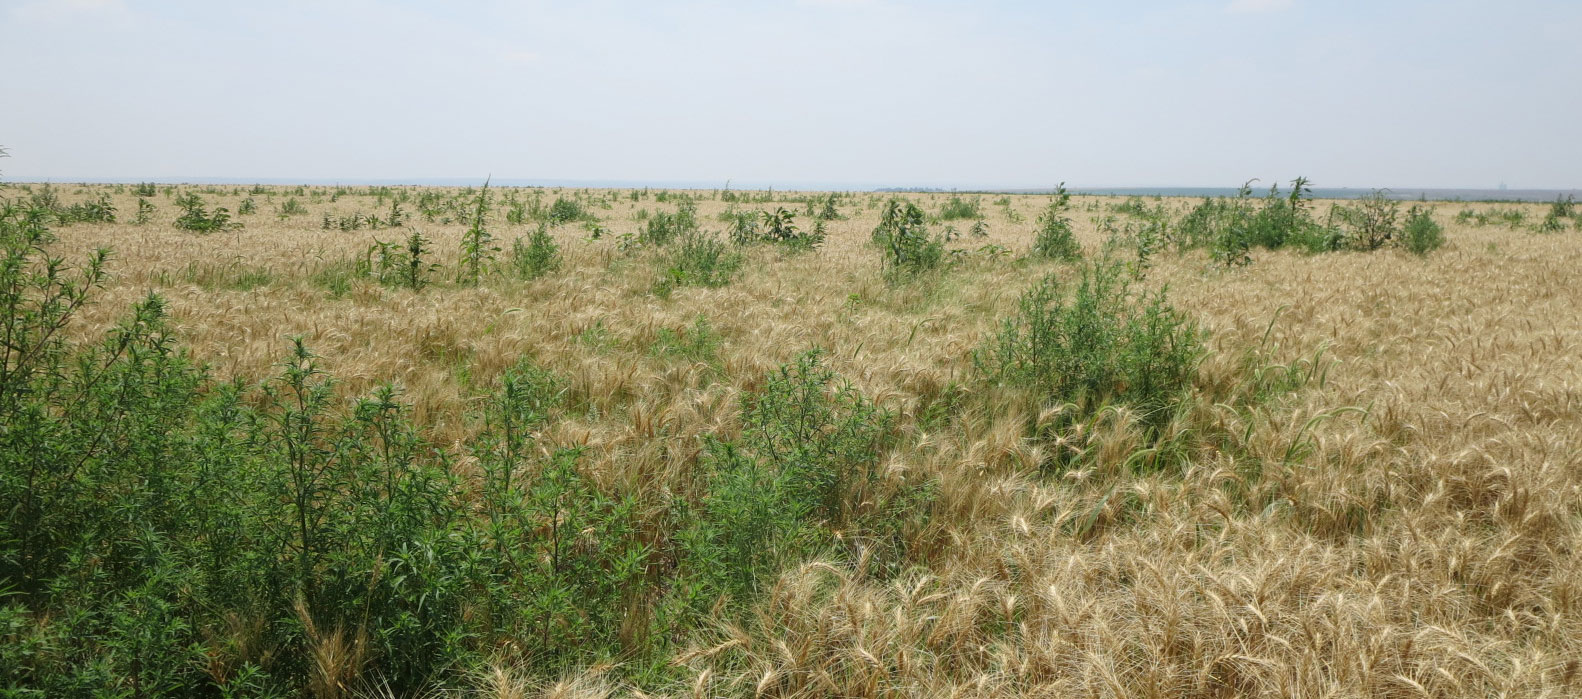 Extensive weeds in winter wheat field 